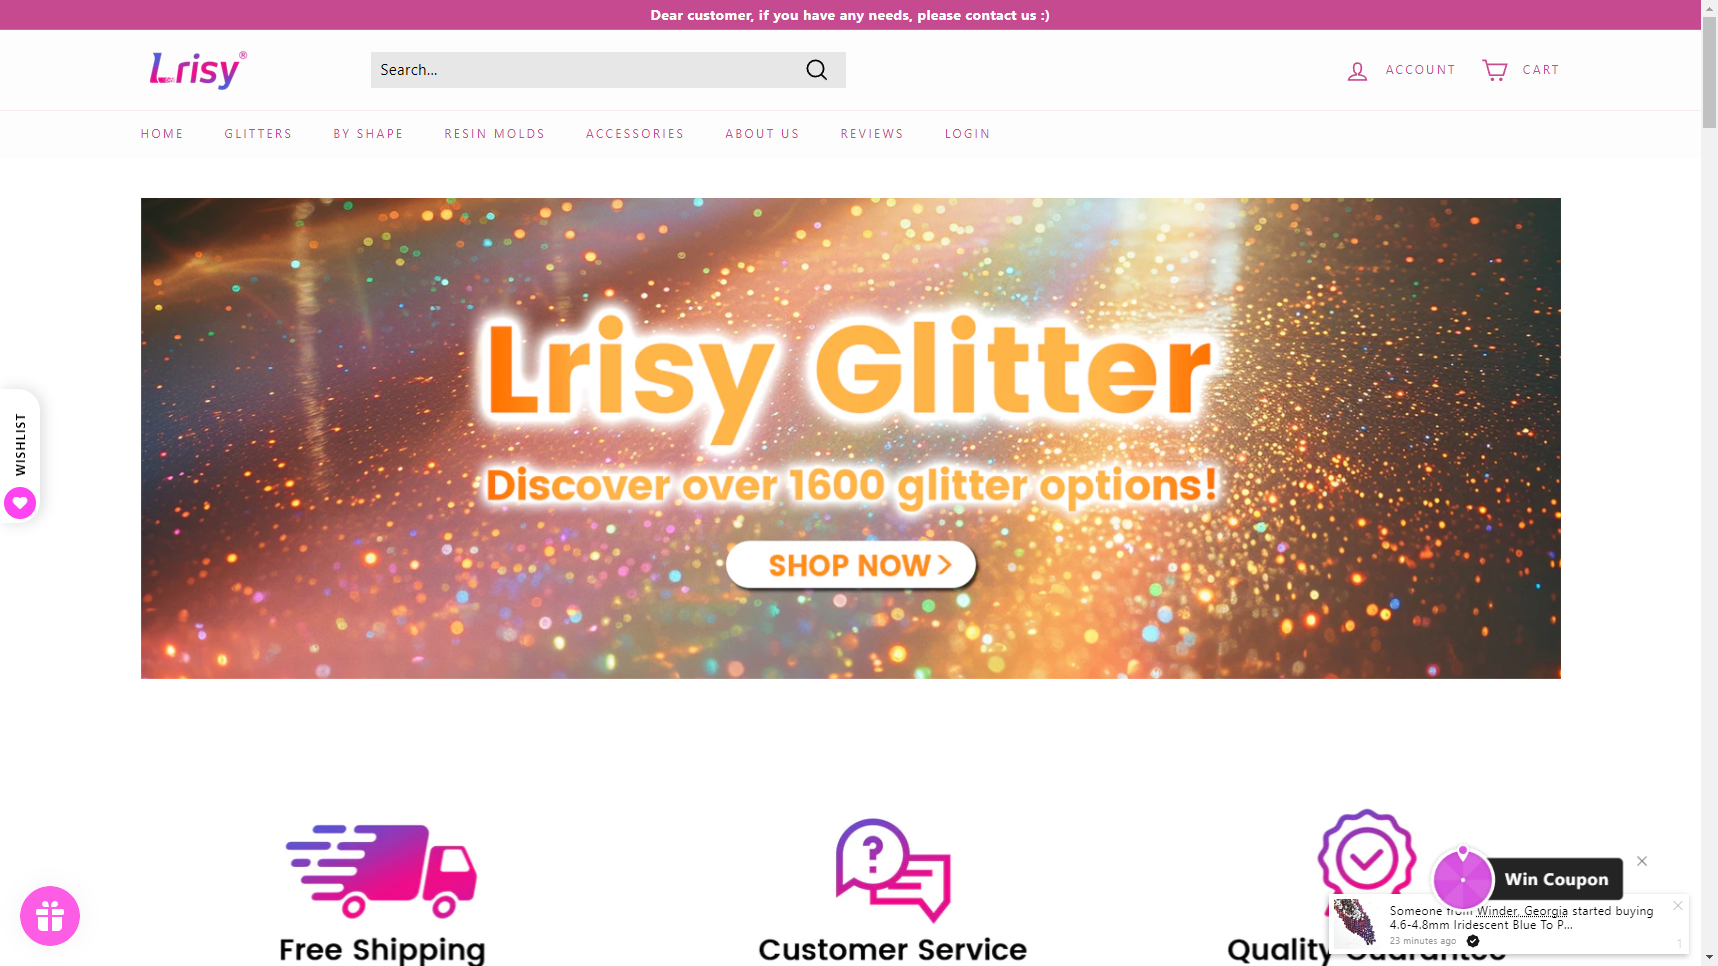 Lrisy - Glitter Manufacturer